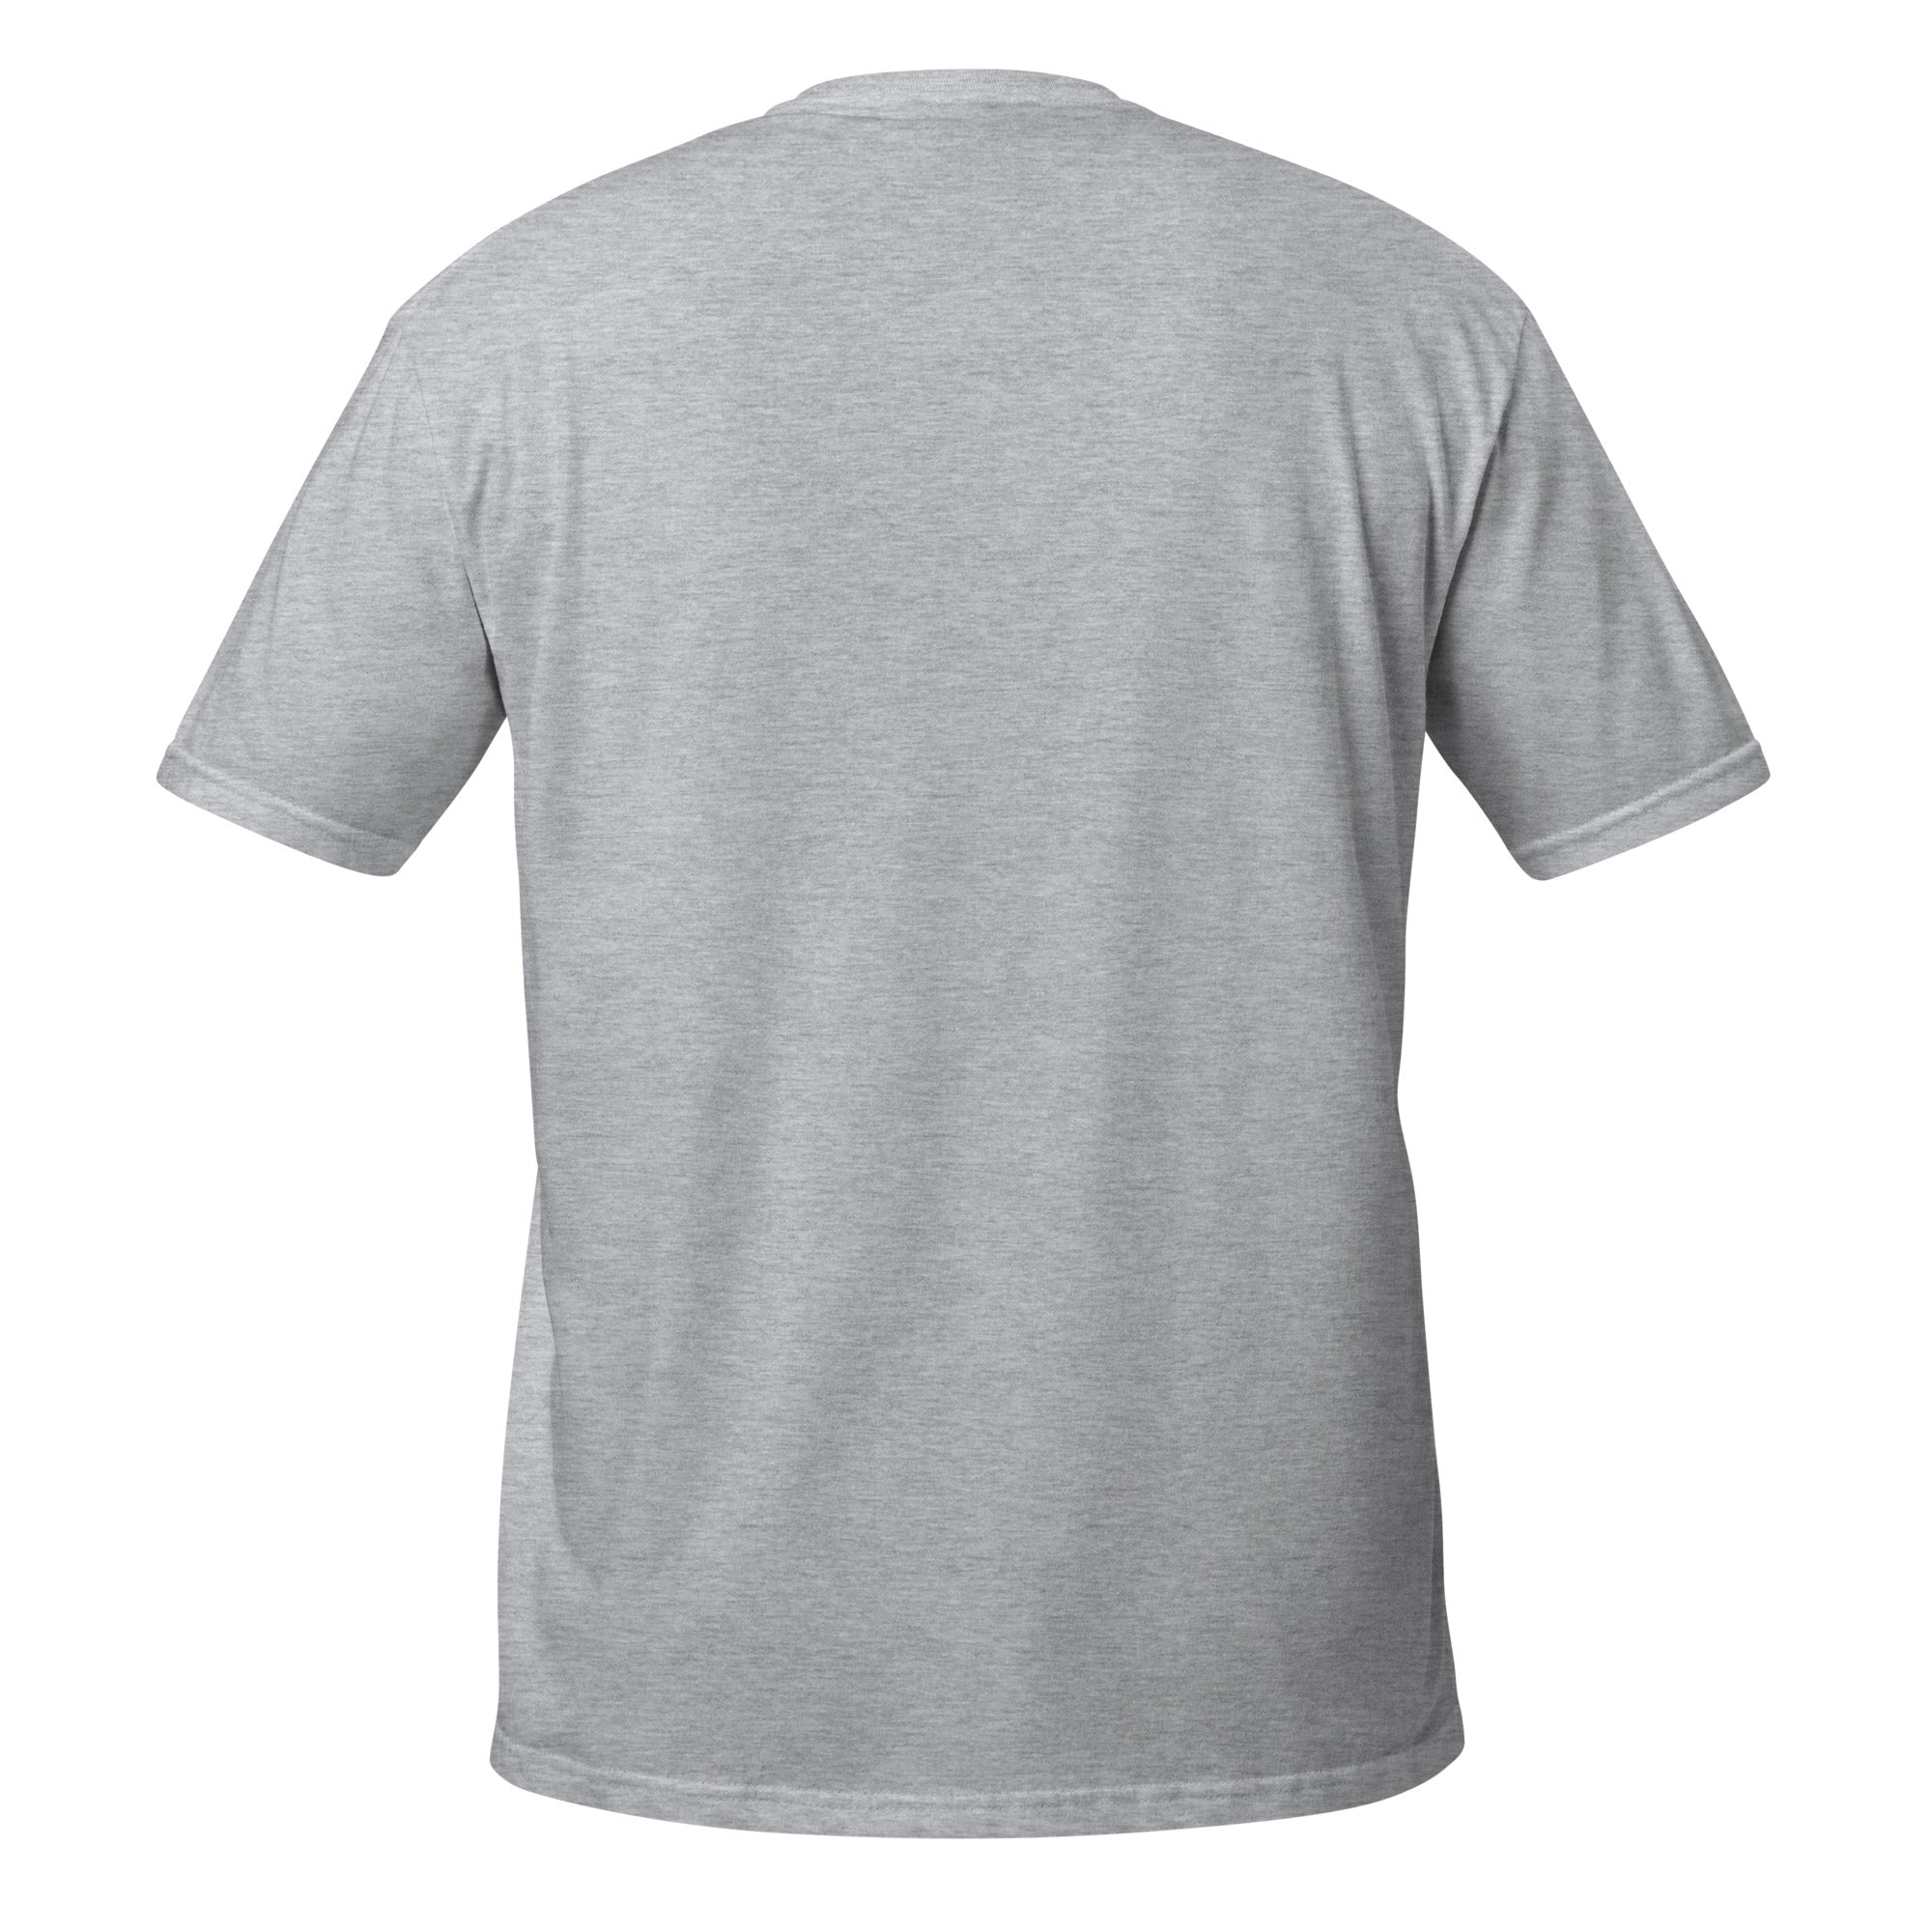 Short-Sleeve Unisex T-Shirt- Proud member of the alphabet mafia